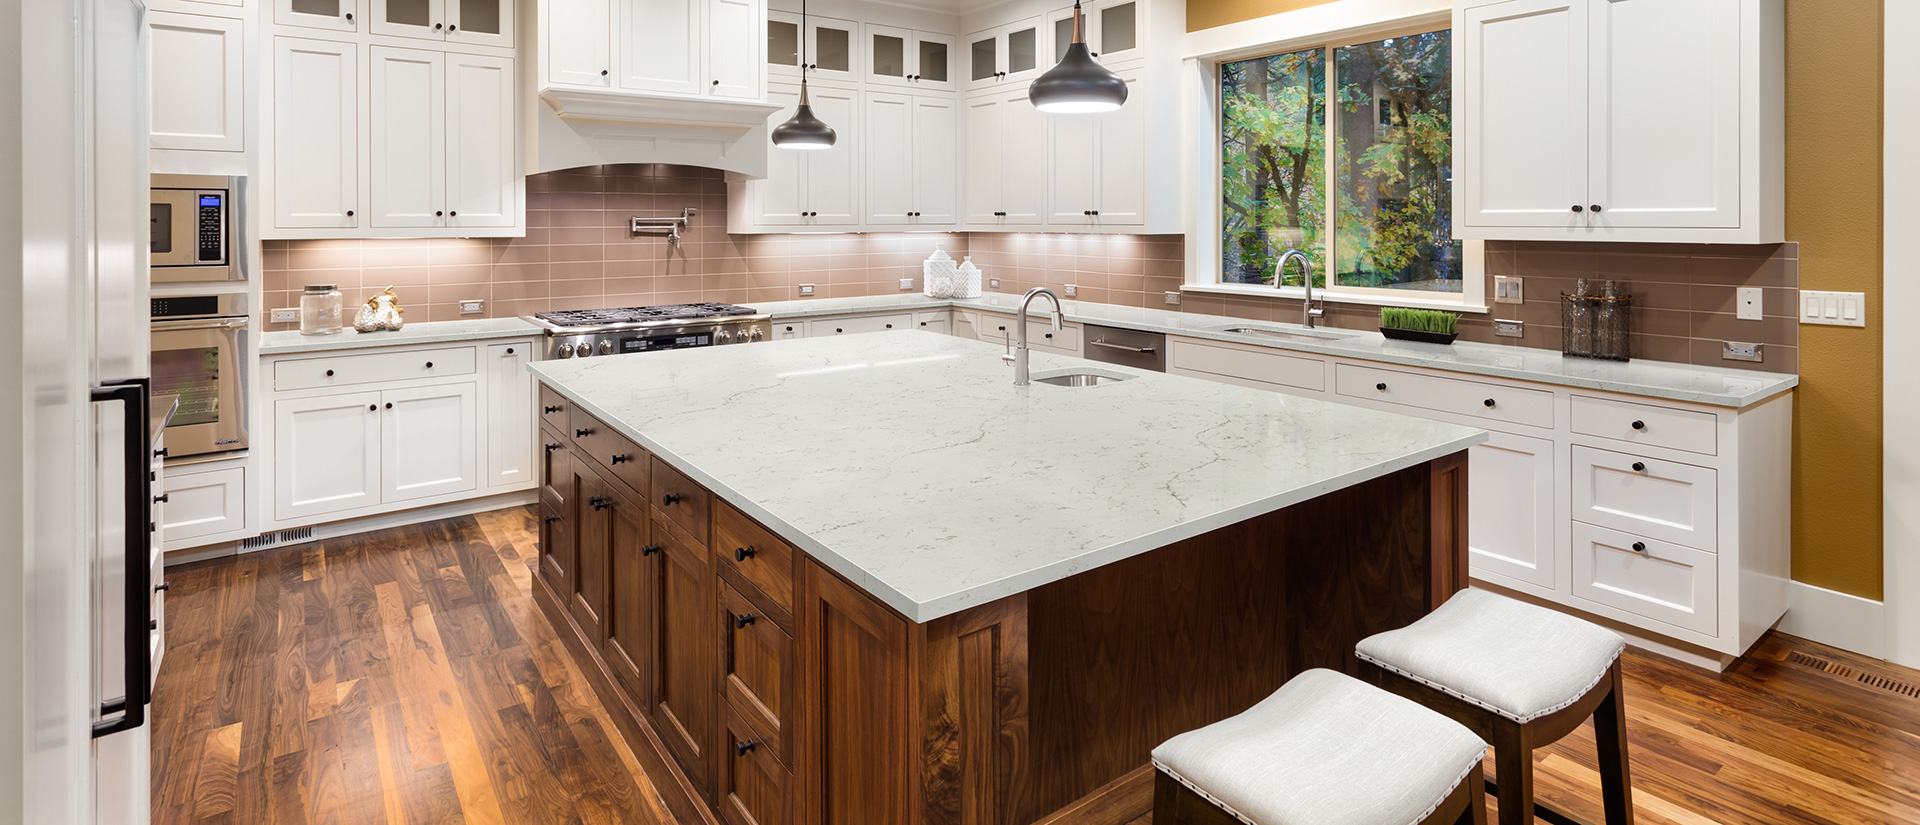 Calacatta Lavasa quartz countertop in a luxurious kitchen with marble backsplash